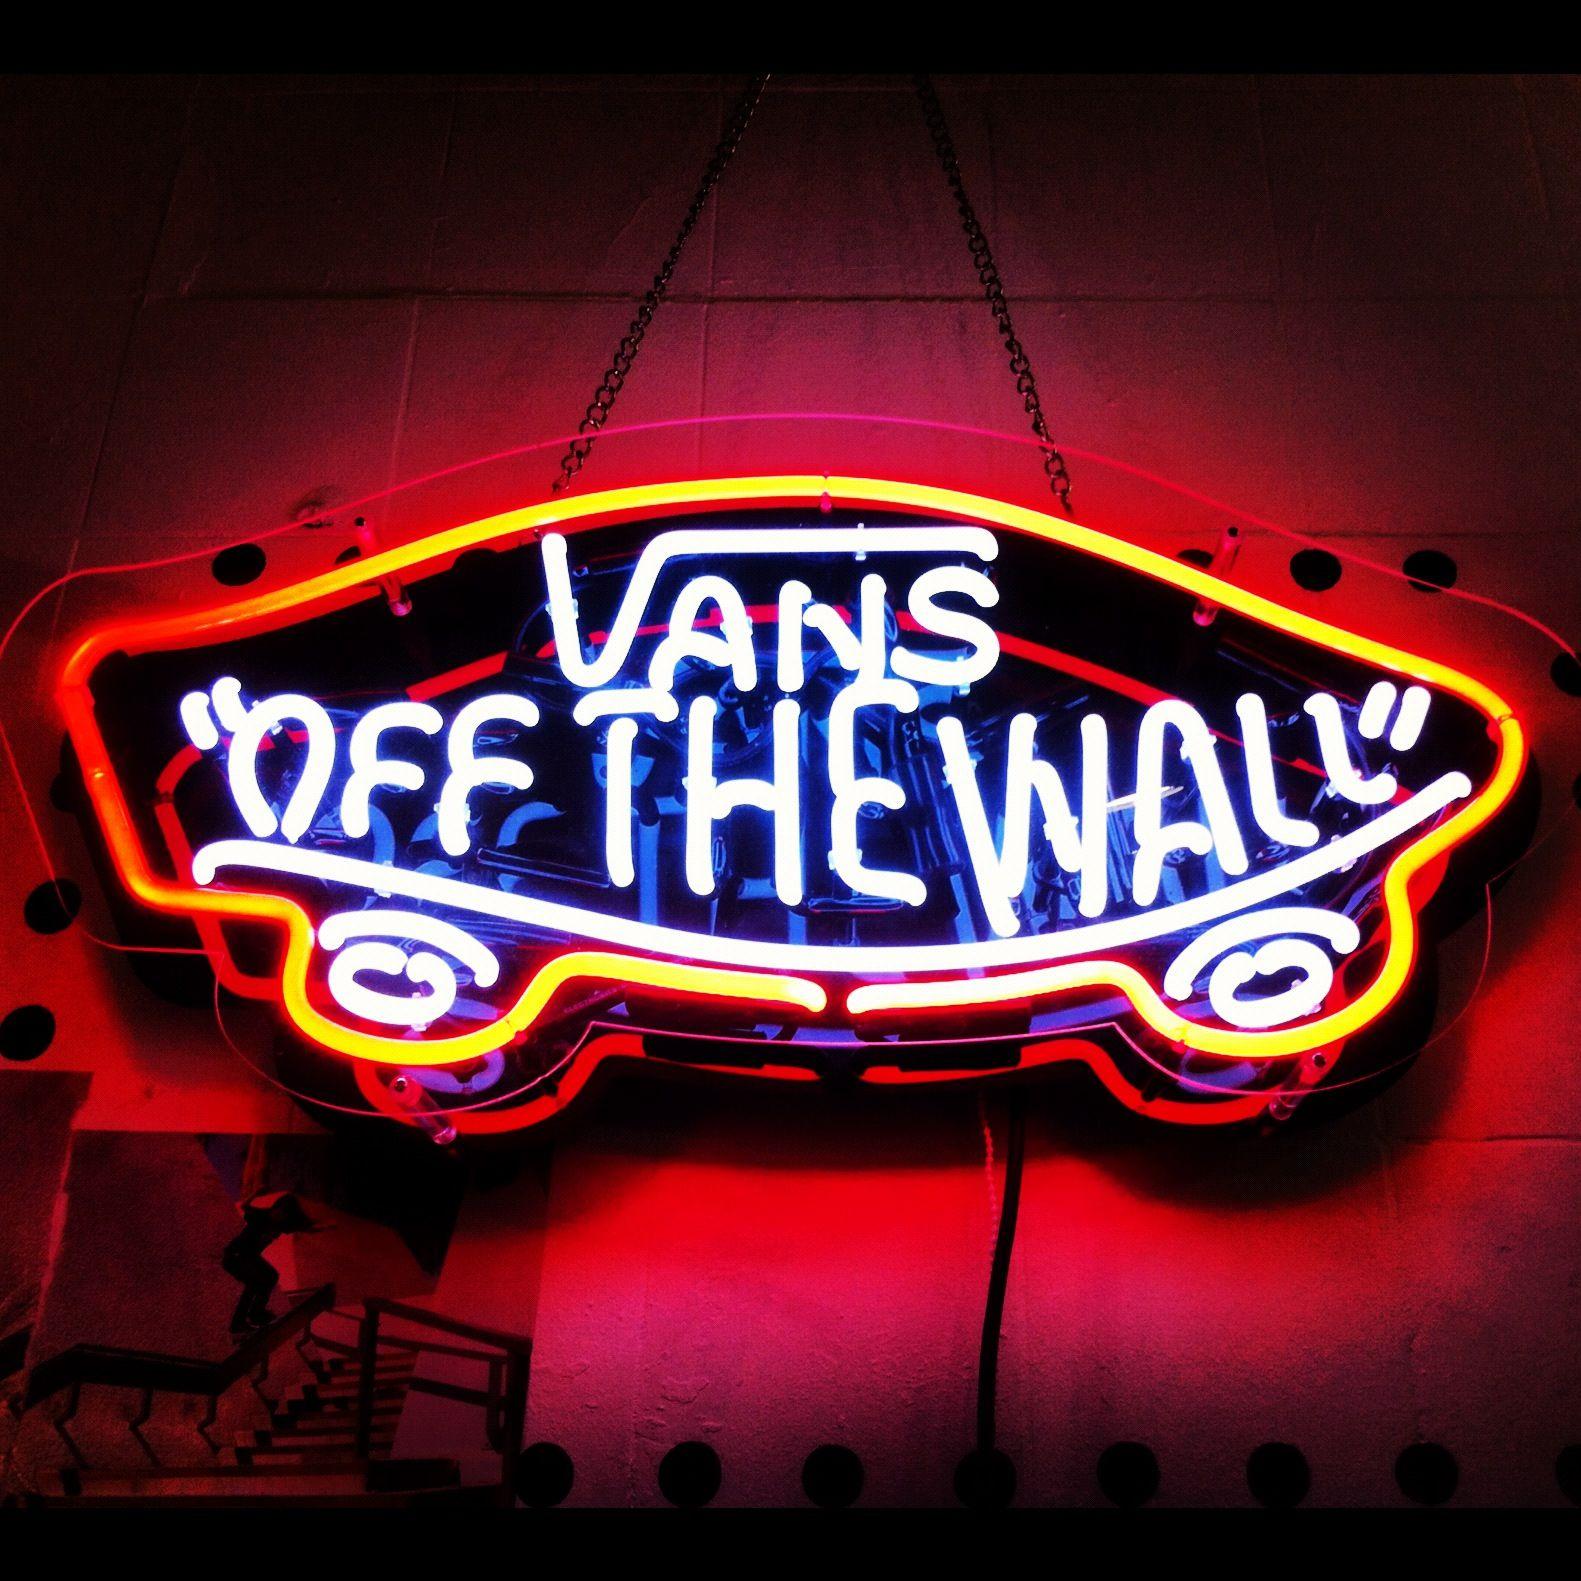 Van's off the wall. :) one of my fav shoe companies. Love neon